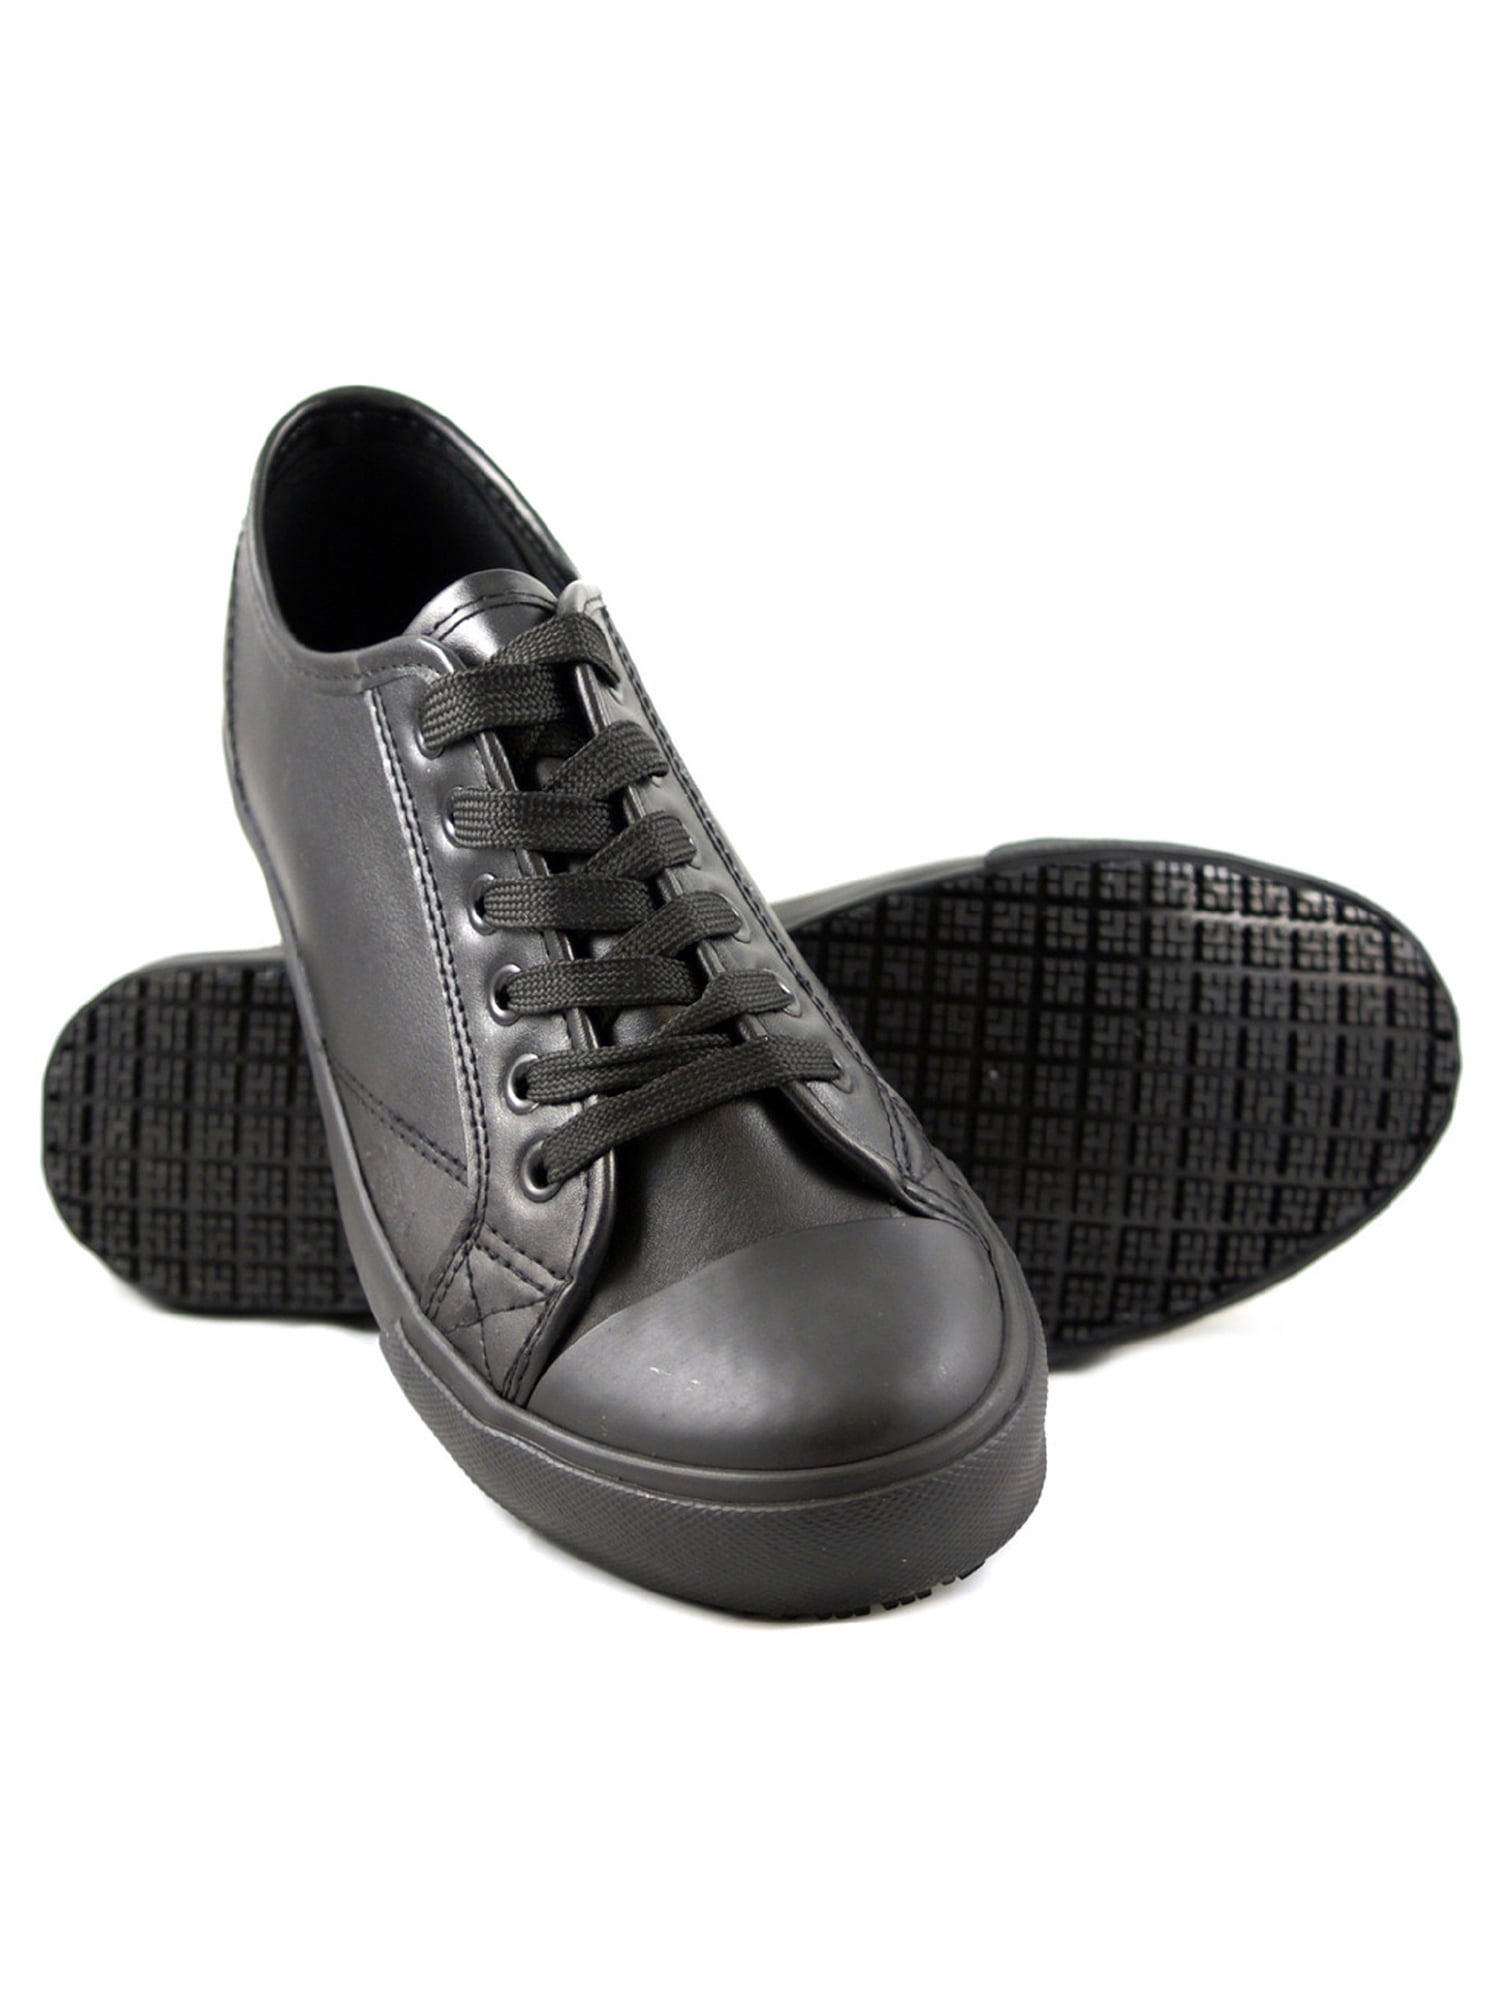 Own Shoe - OwnShoe Slip Resistant Work 